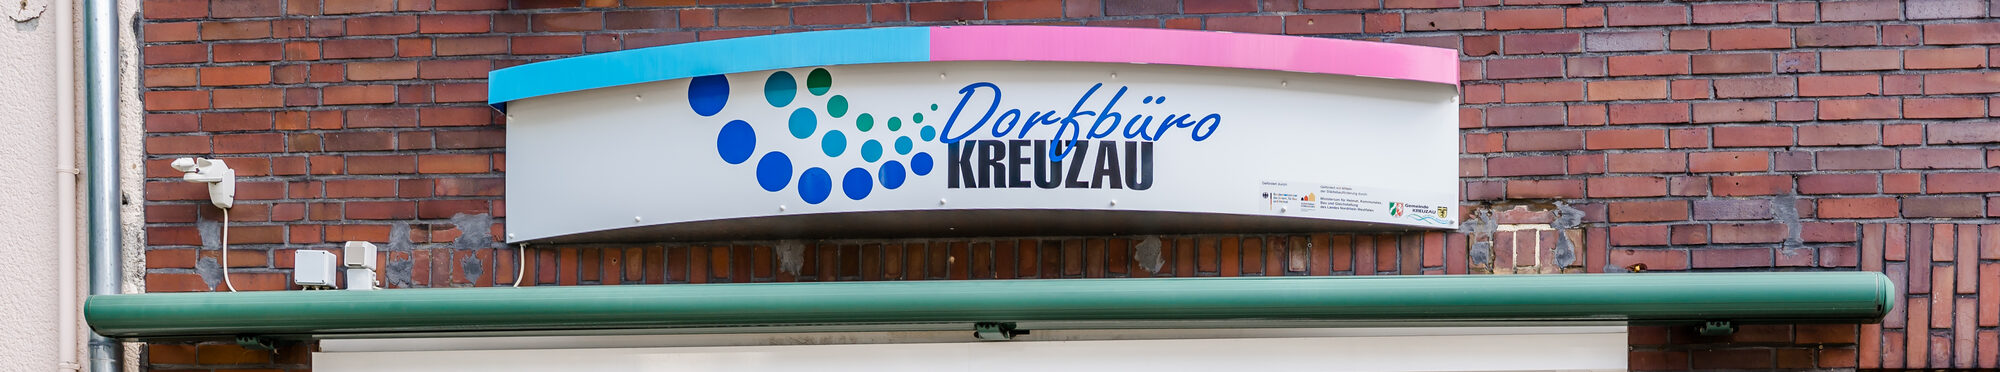 Masterplan Gemeinde Kreuzau - Dorfbüro grüßt